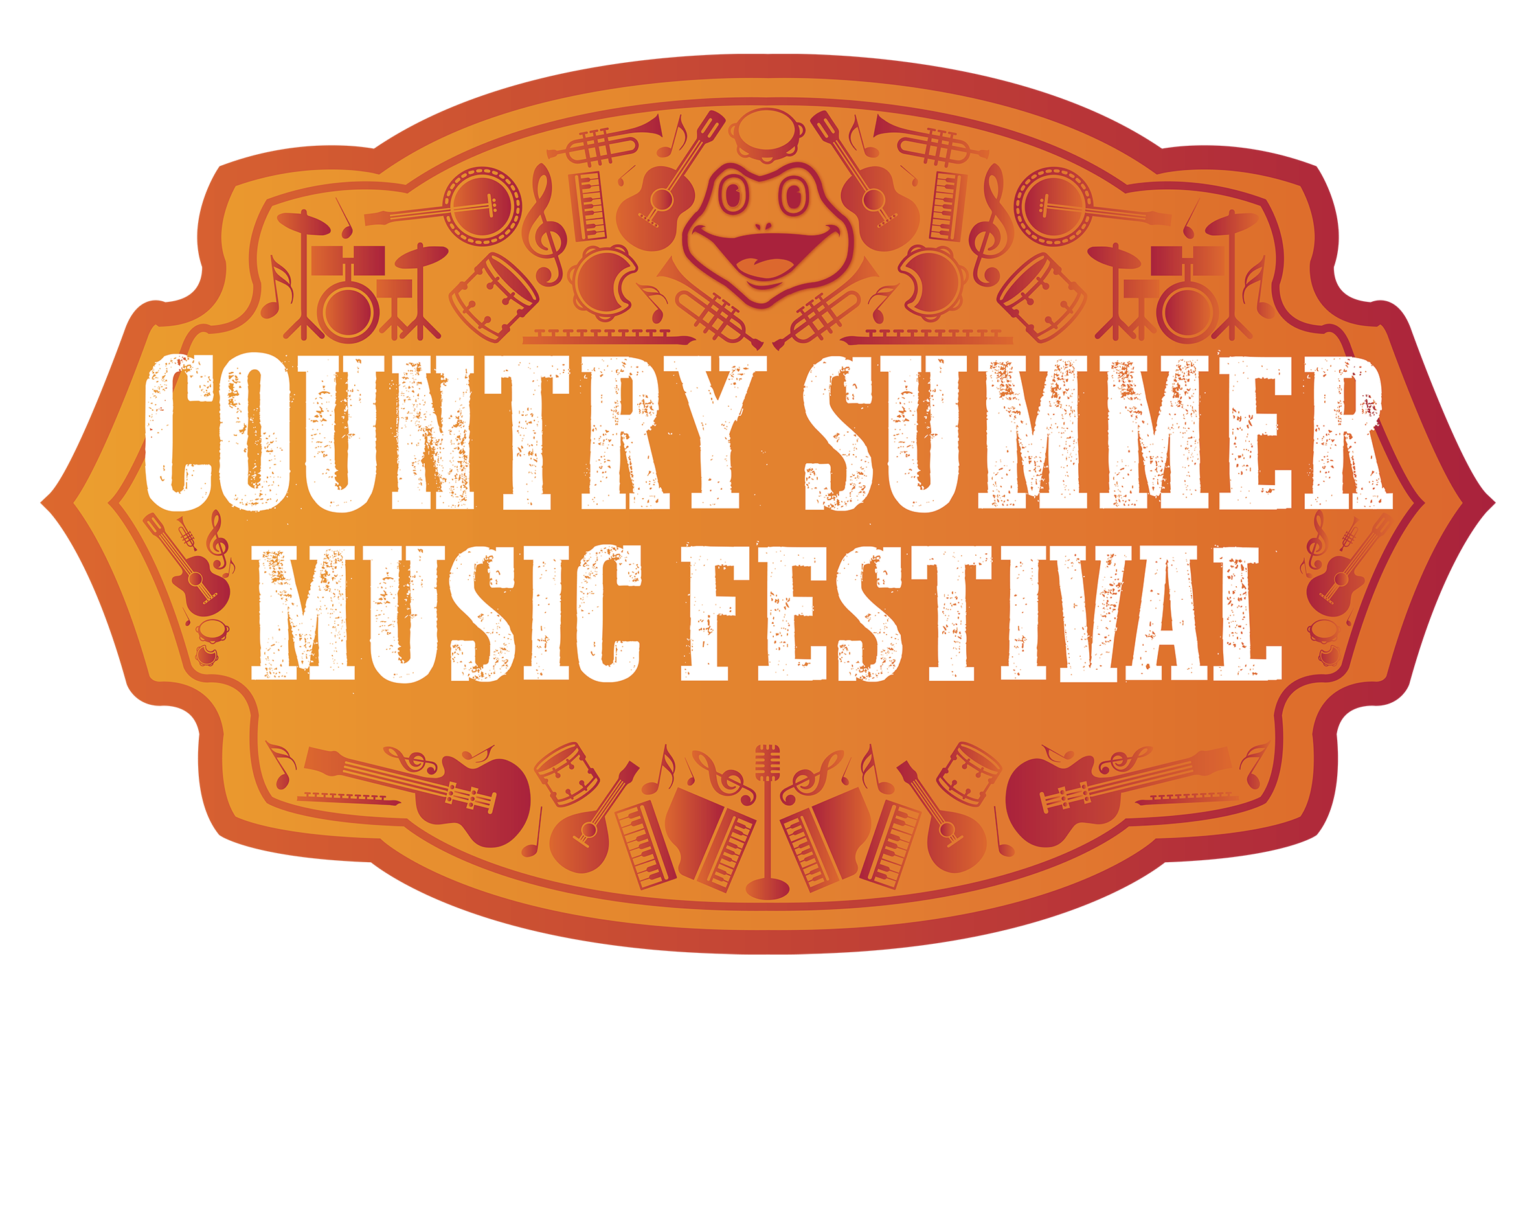 Country Summer Musical Festival